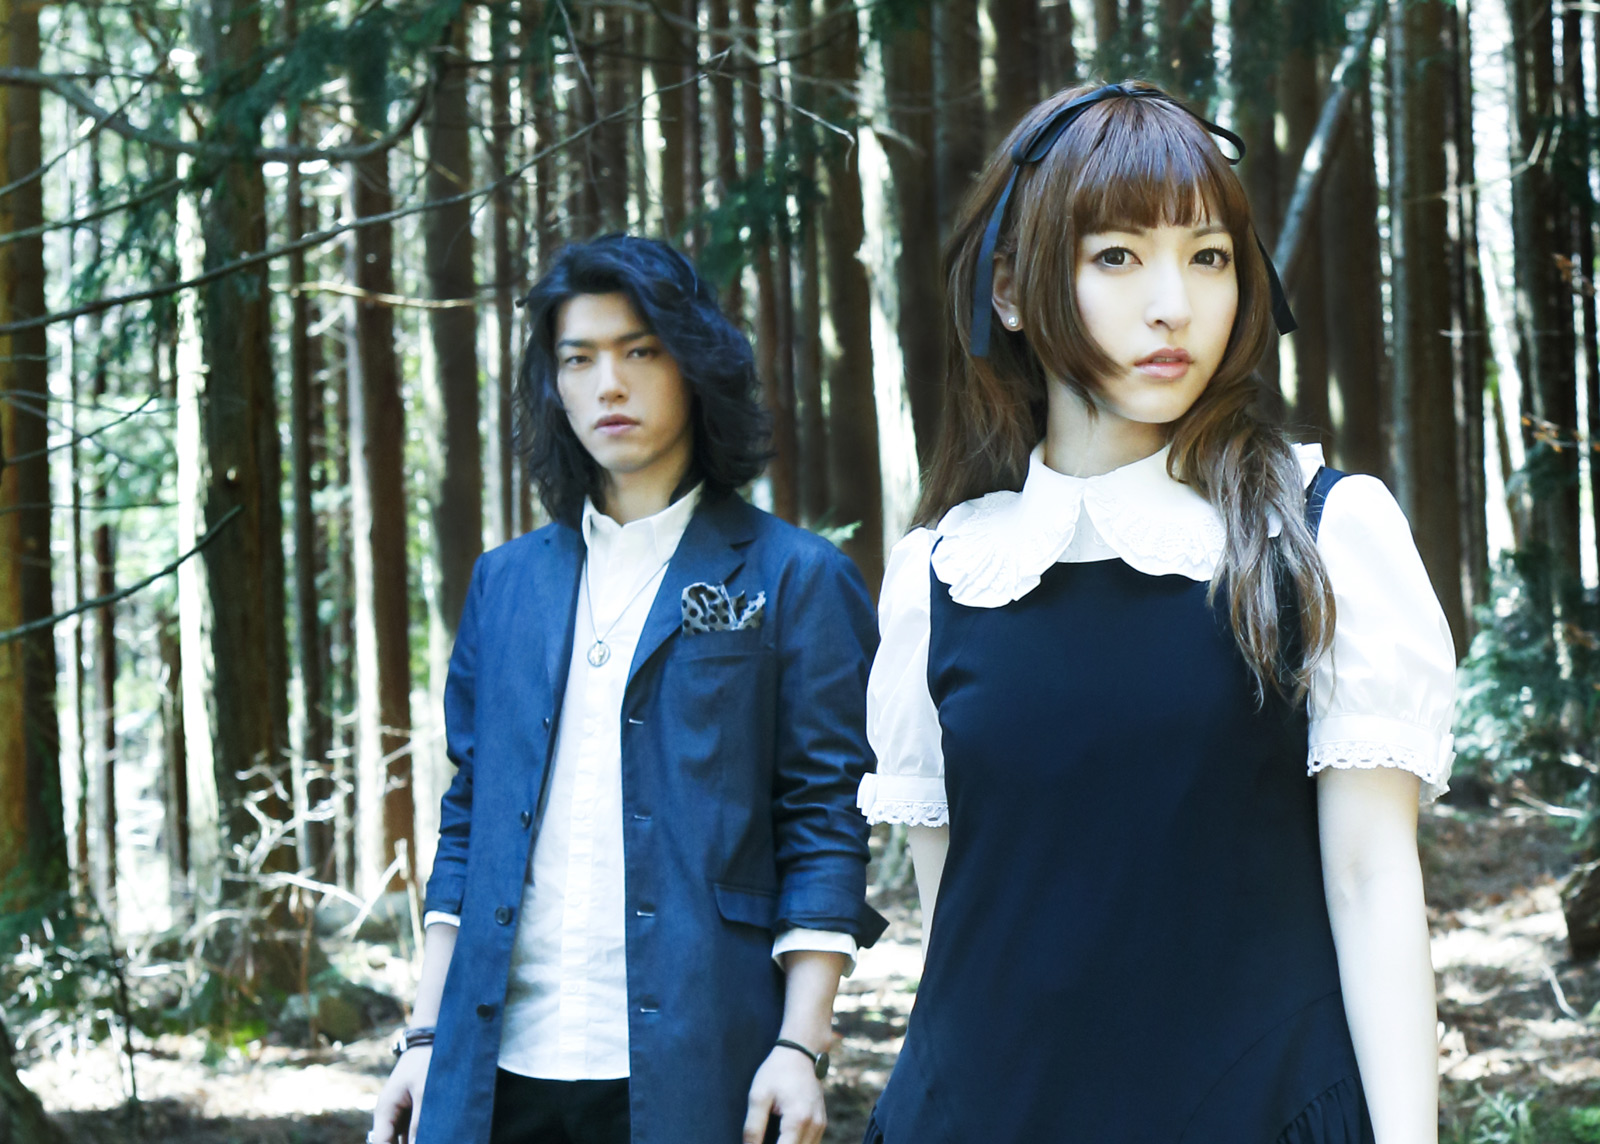 Sayaka Kanda’s Gothic-Style Unit “TRUSTRICK” to Make Debut in June!